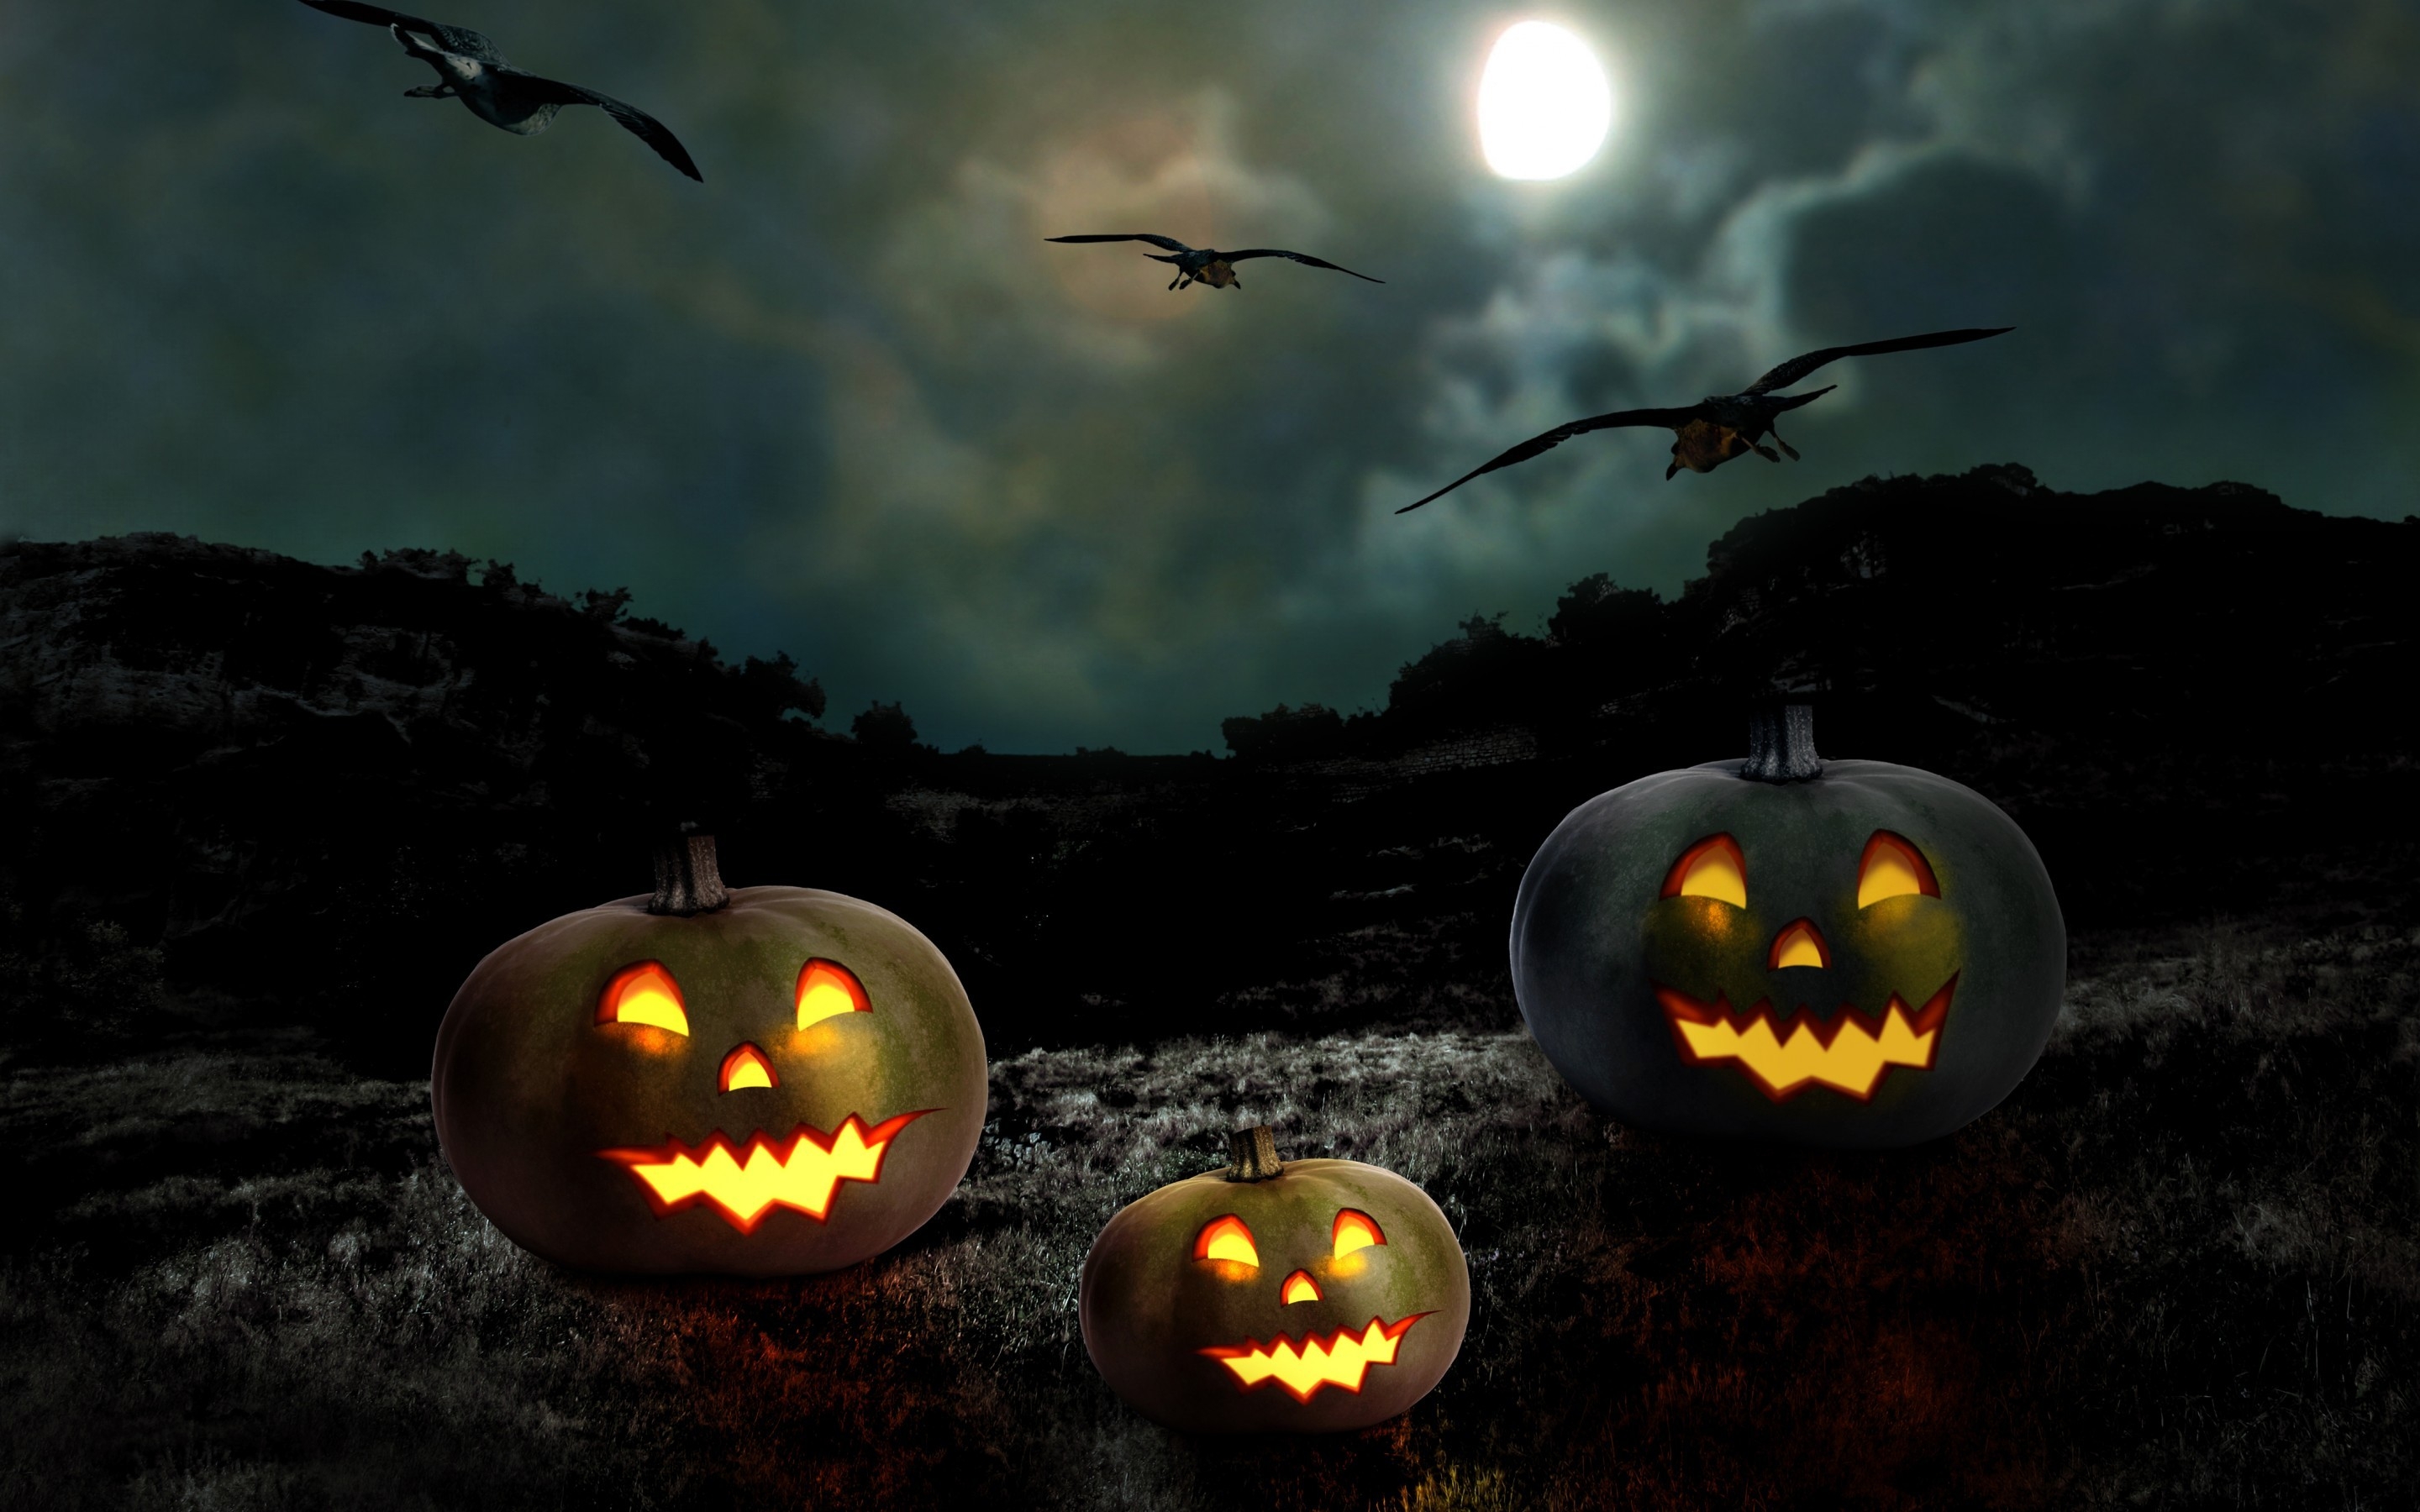 Halloween Pumpkin Smile for 2880 x 1800 Retina Display resolution